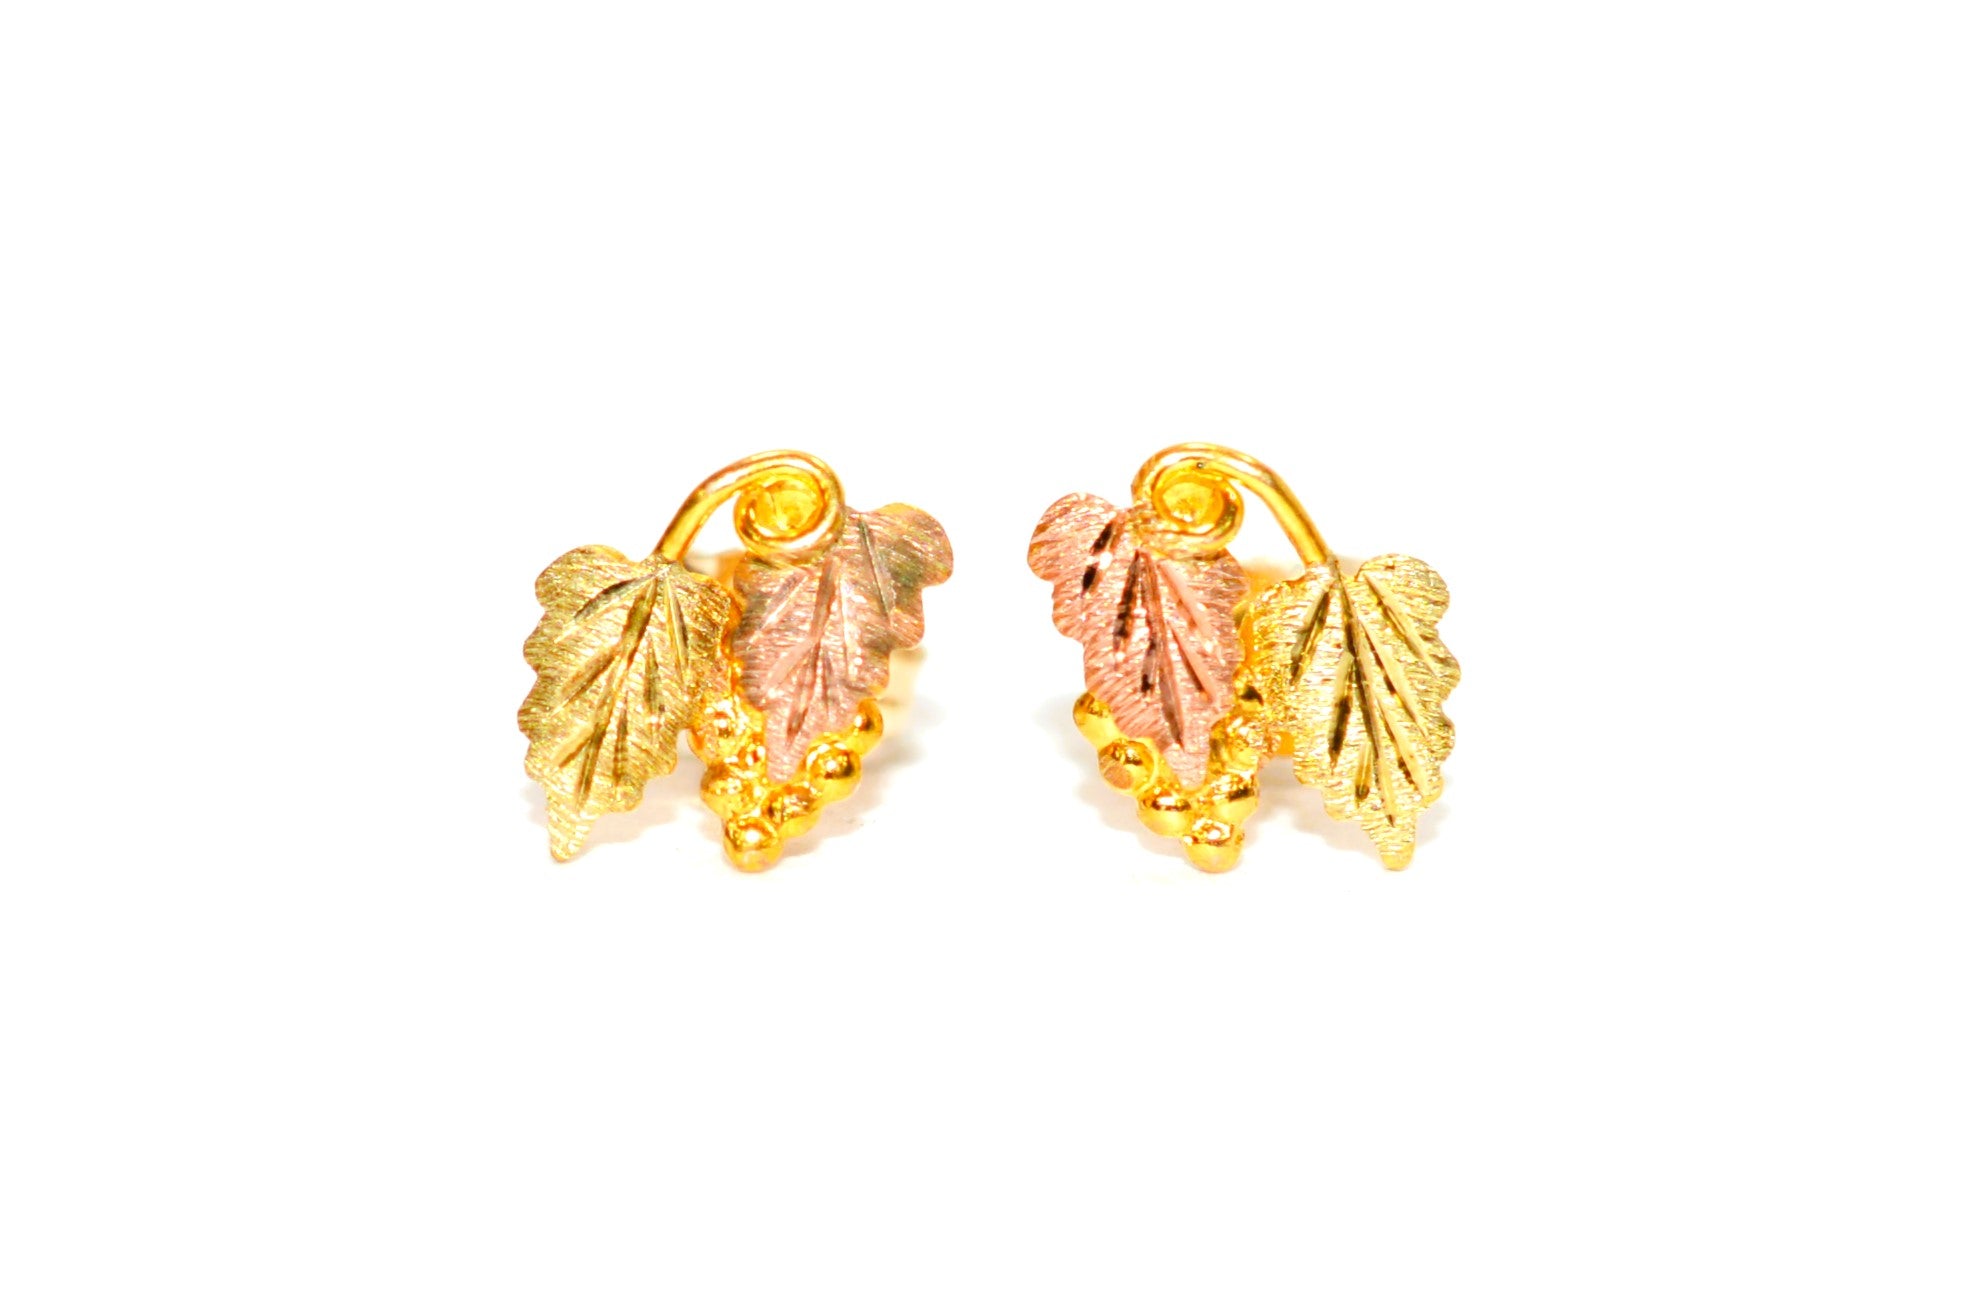 Black Hills Gold Earrings 10K Solid Gold Leaf Earrings Tri-Color Gold Earrings South Dakota Gold Stud Earrings American USA Vintage Estate